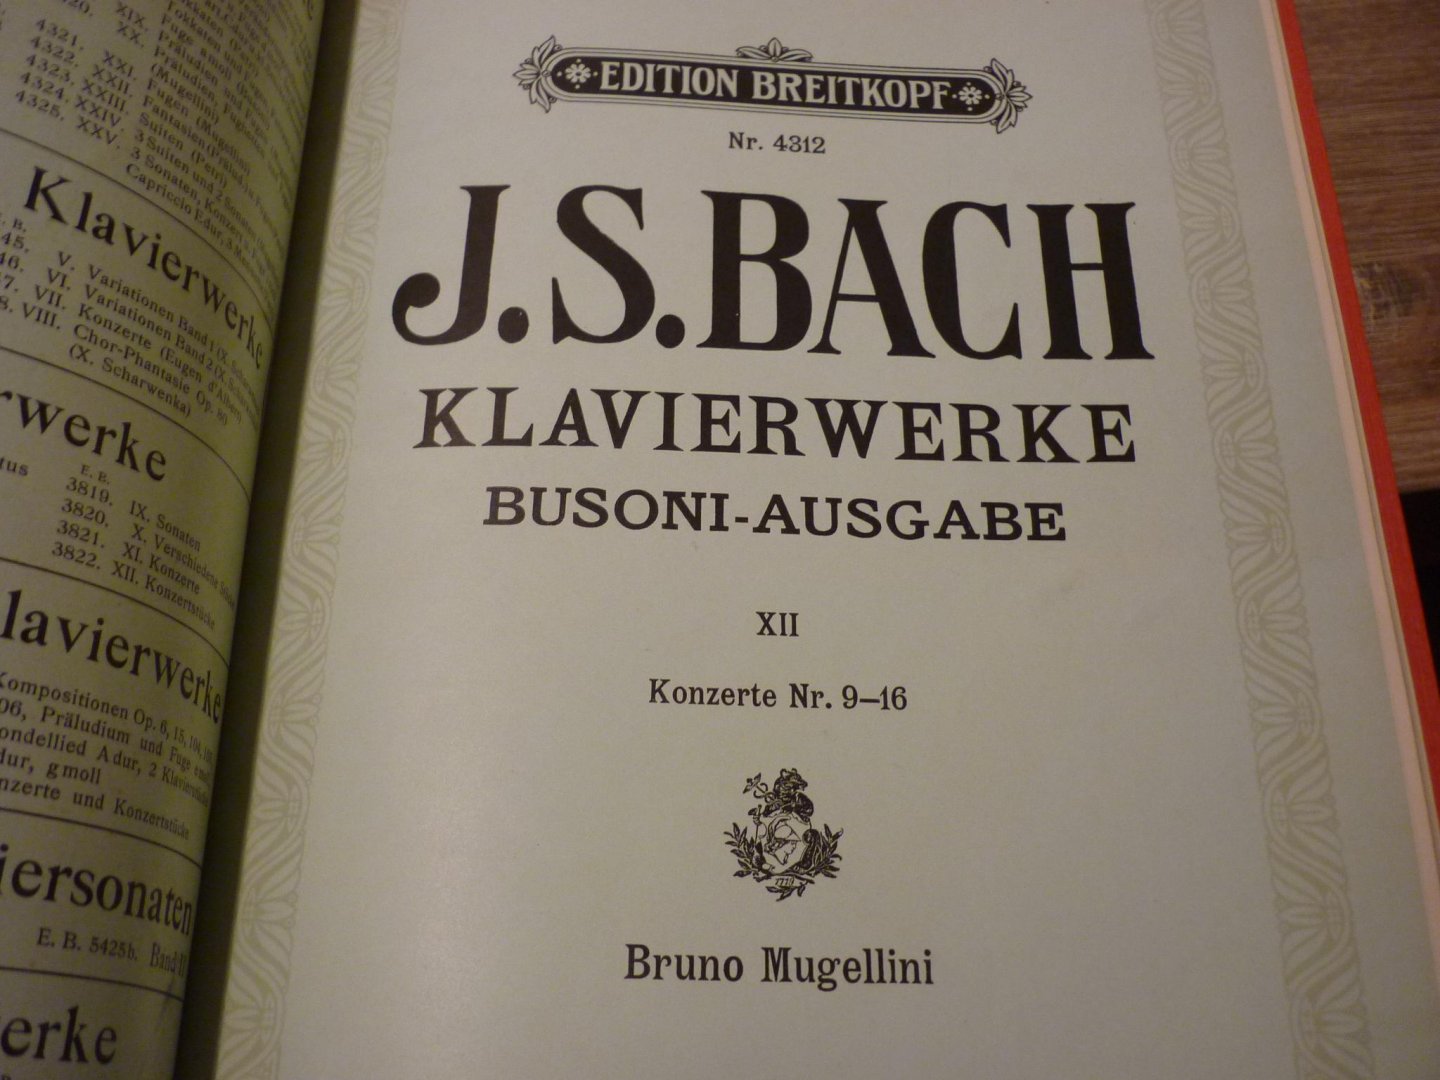 Bach; J. S. (1685-1750) - Konzerte nach verschiedenen Meistern 1-16; Busoni-Ausgabe - Band 11 en Band 12